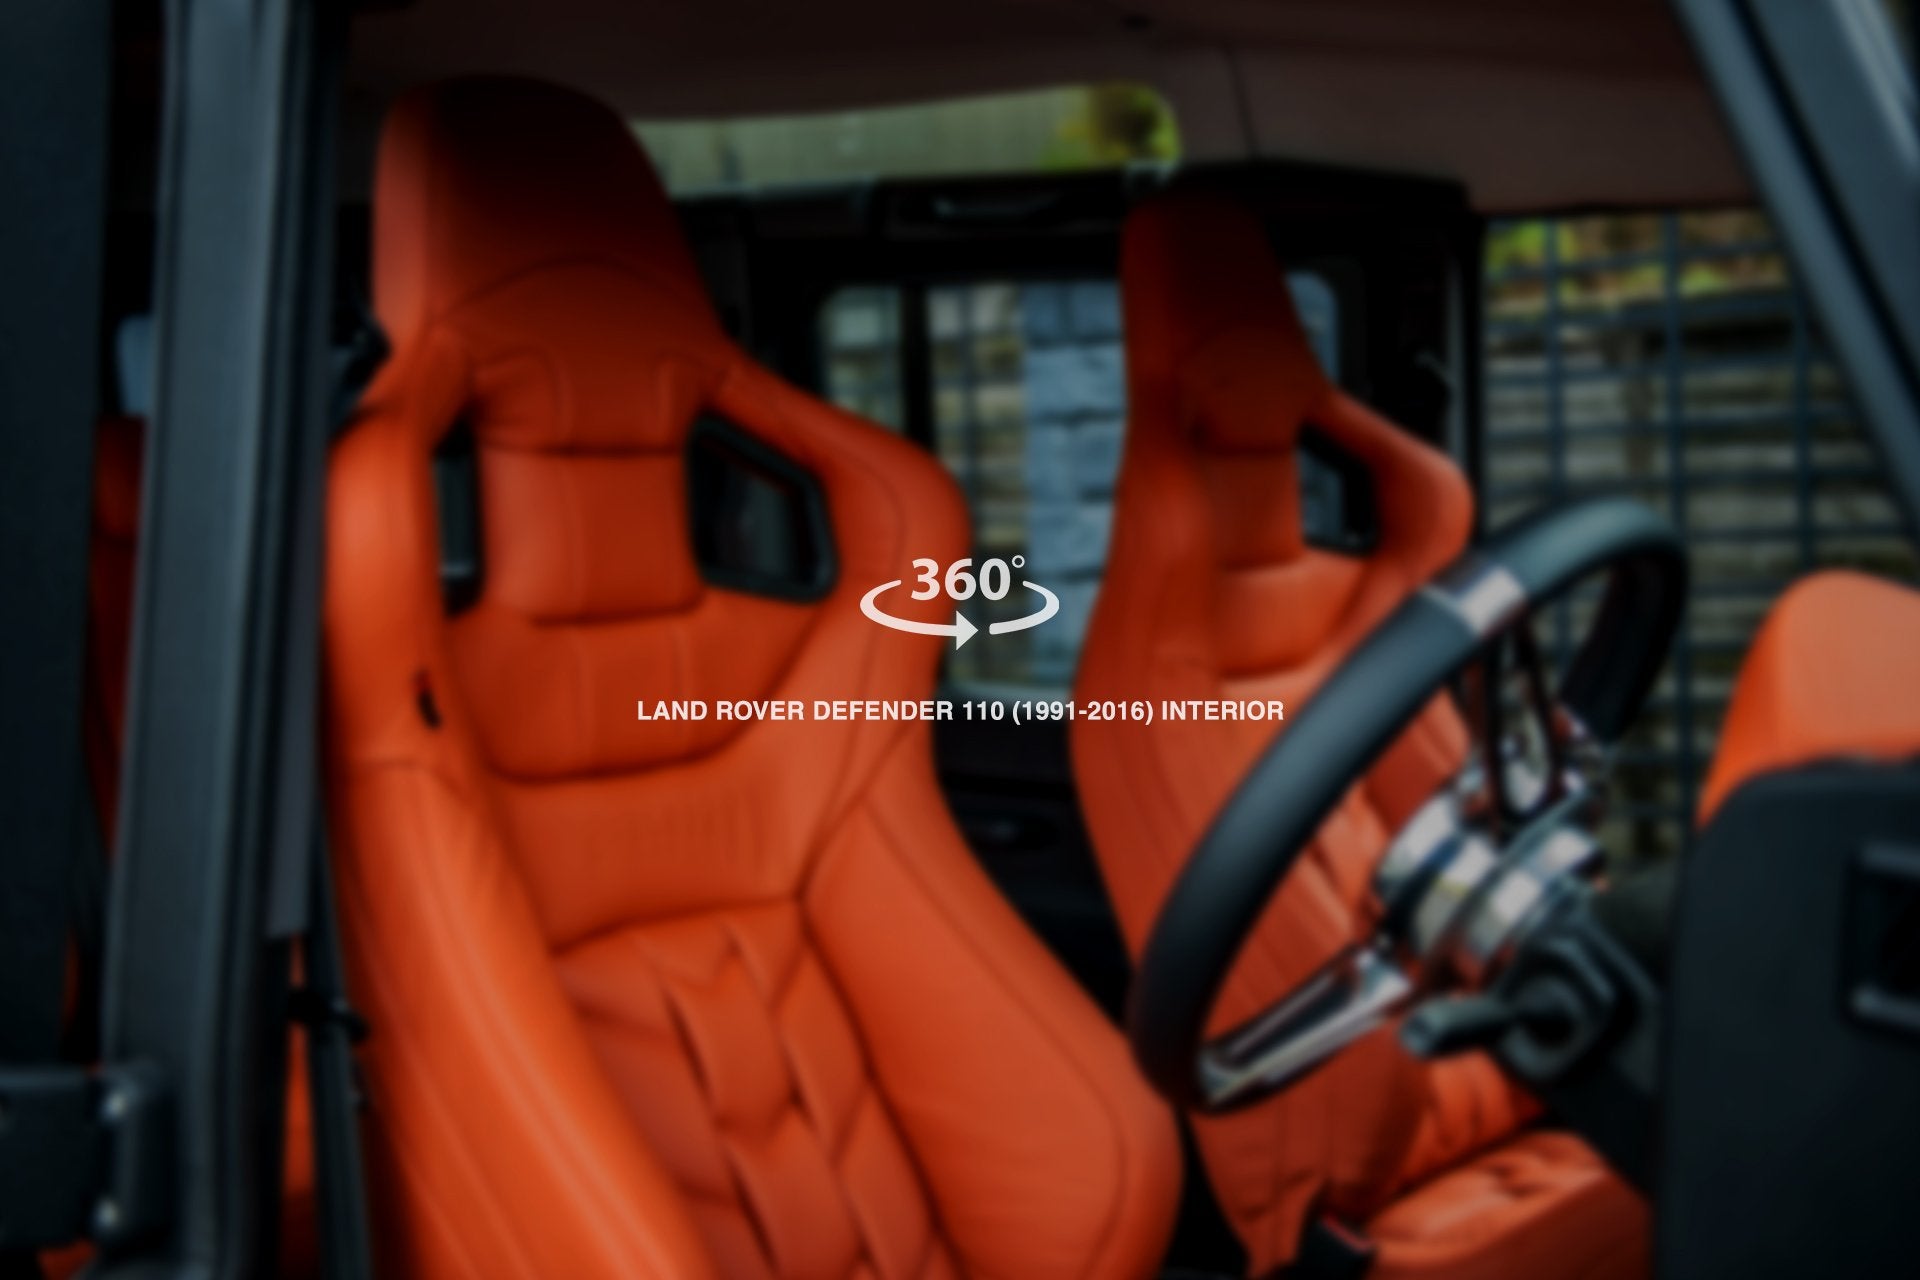 Land Rover Defender 110 (1991-2016) Sport Leather Interior 360° Tour